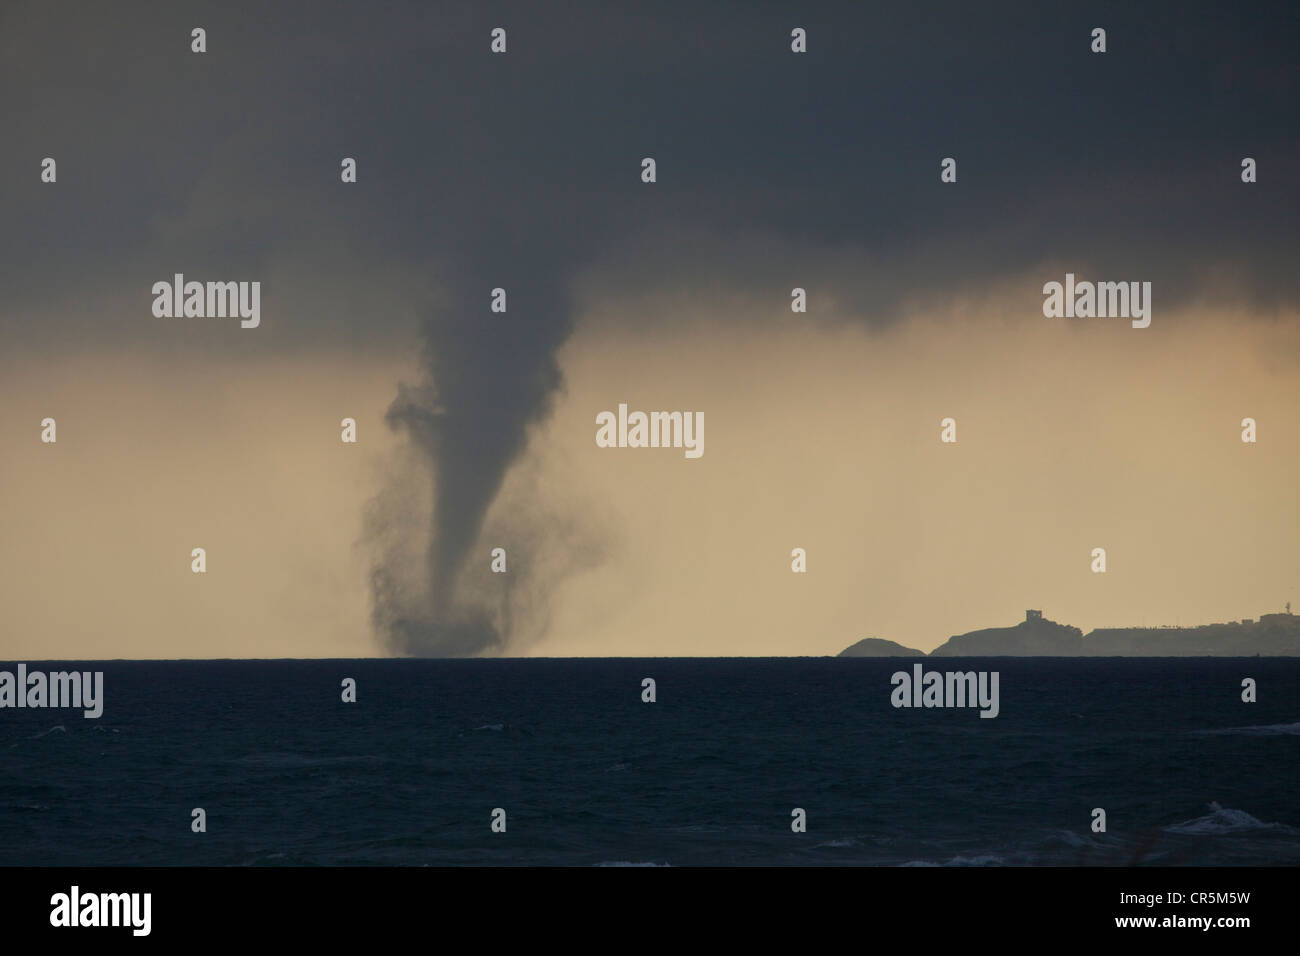 Tornado touching down at sea, Black Sea, Turkey Stock Photo